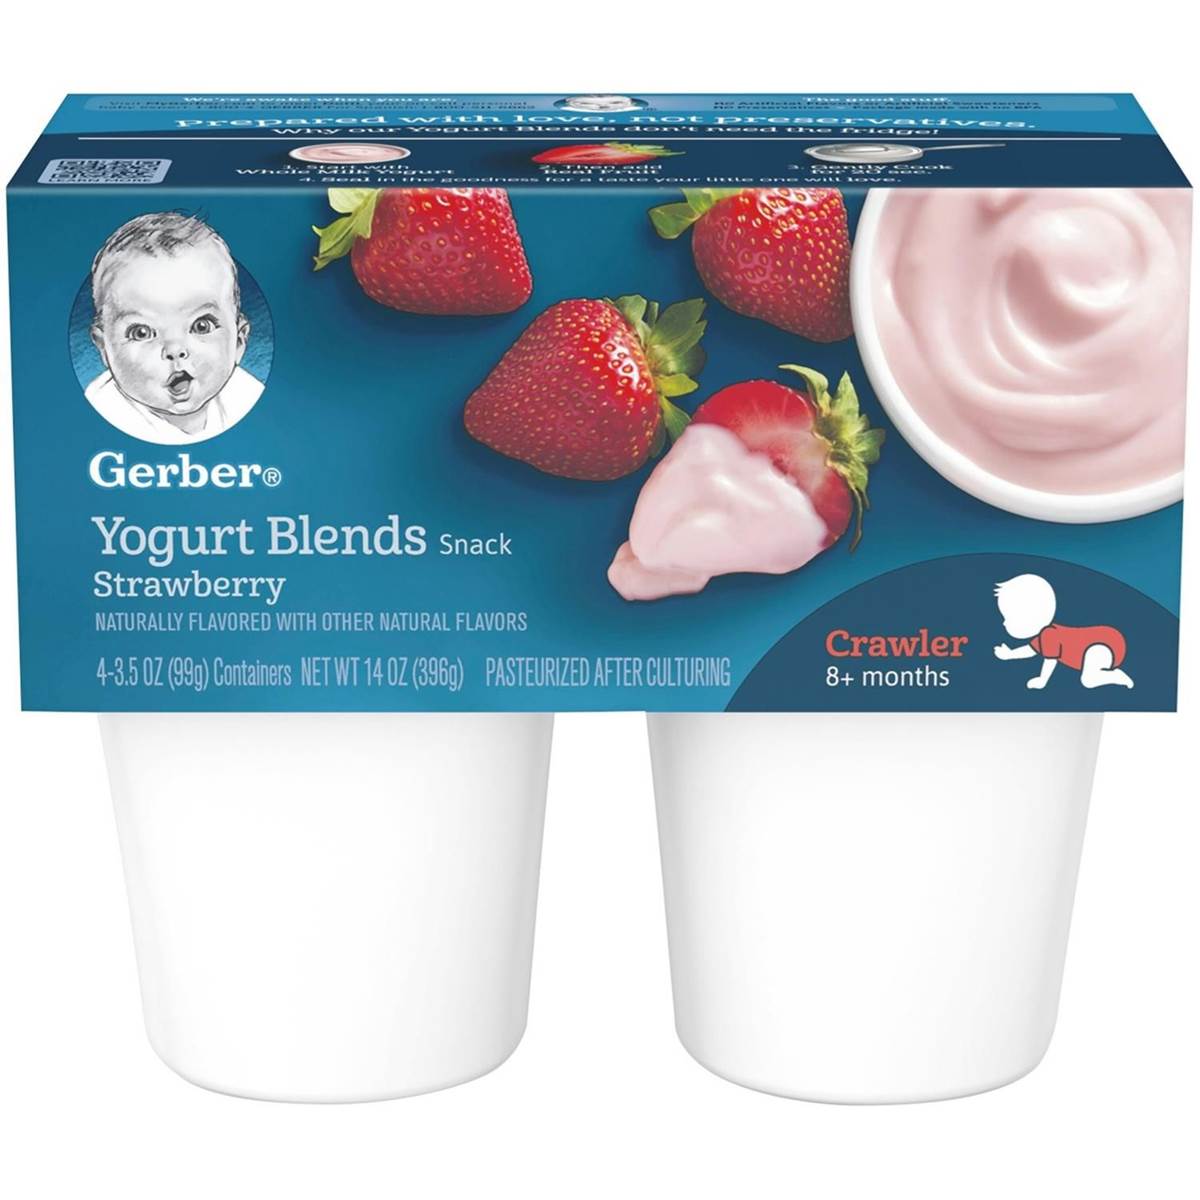 Gerber Yogurt Blends Snack (14oz) - Strawberry